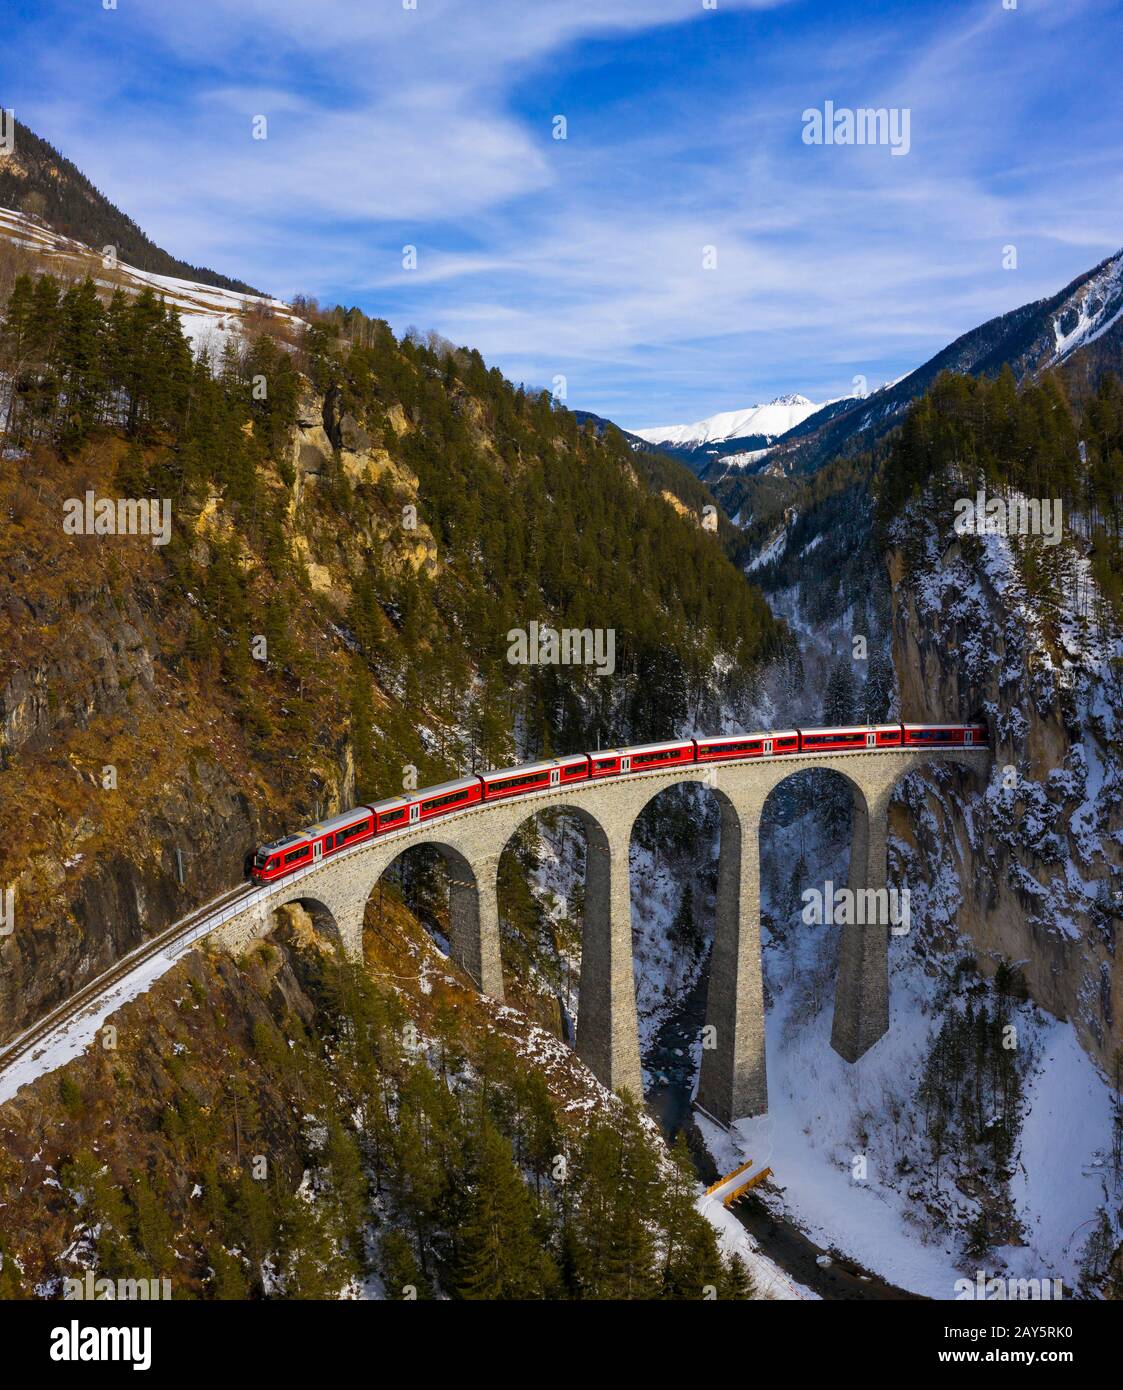 Red train on the Landwasser Viadukt in winter. Filisur, Canton of Graubunden, Switzerland, Southern Europe Stock Photo